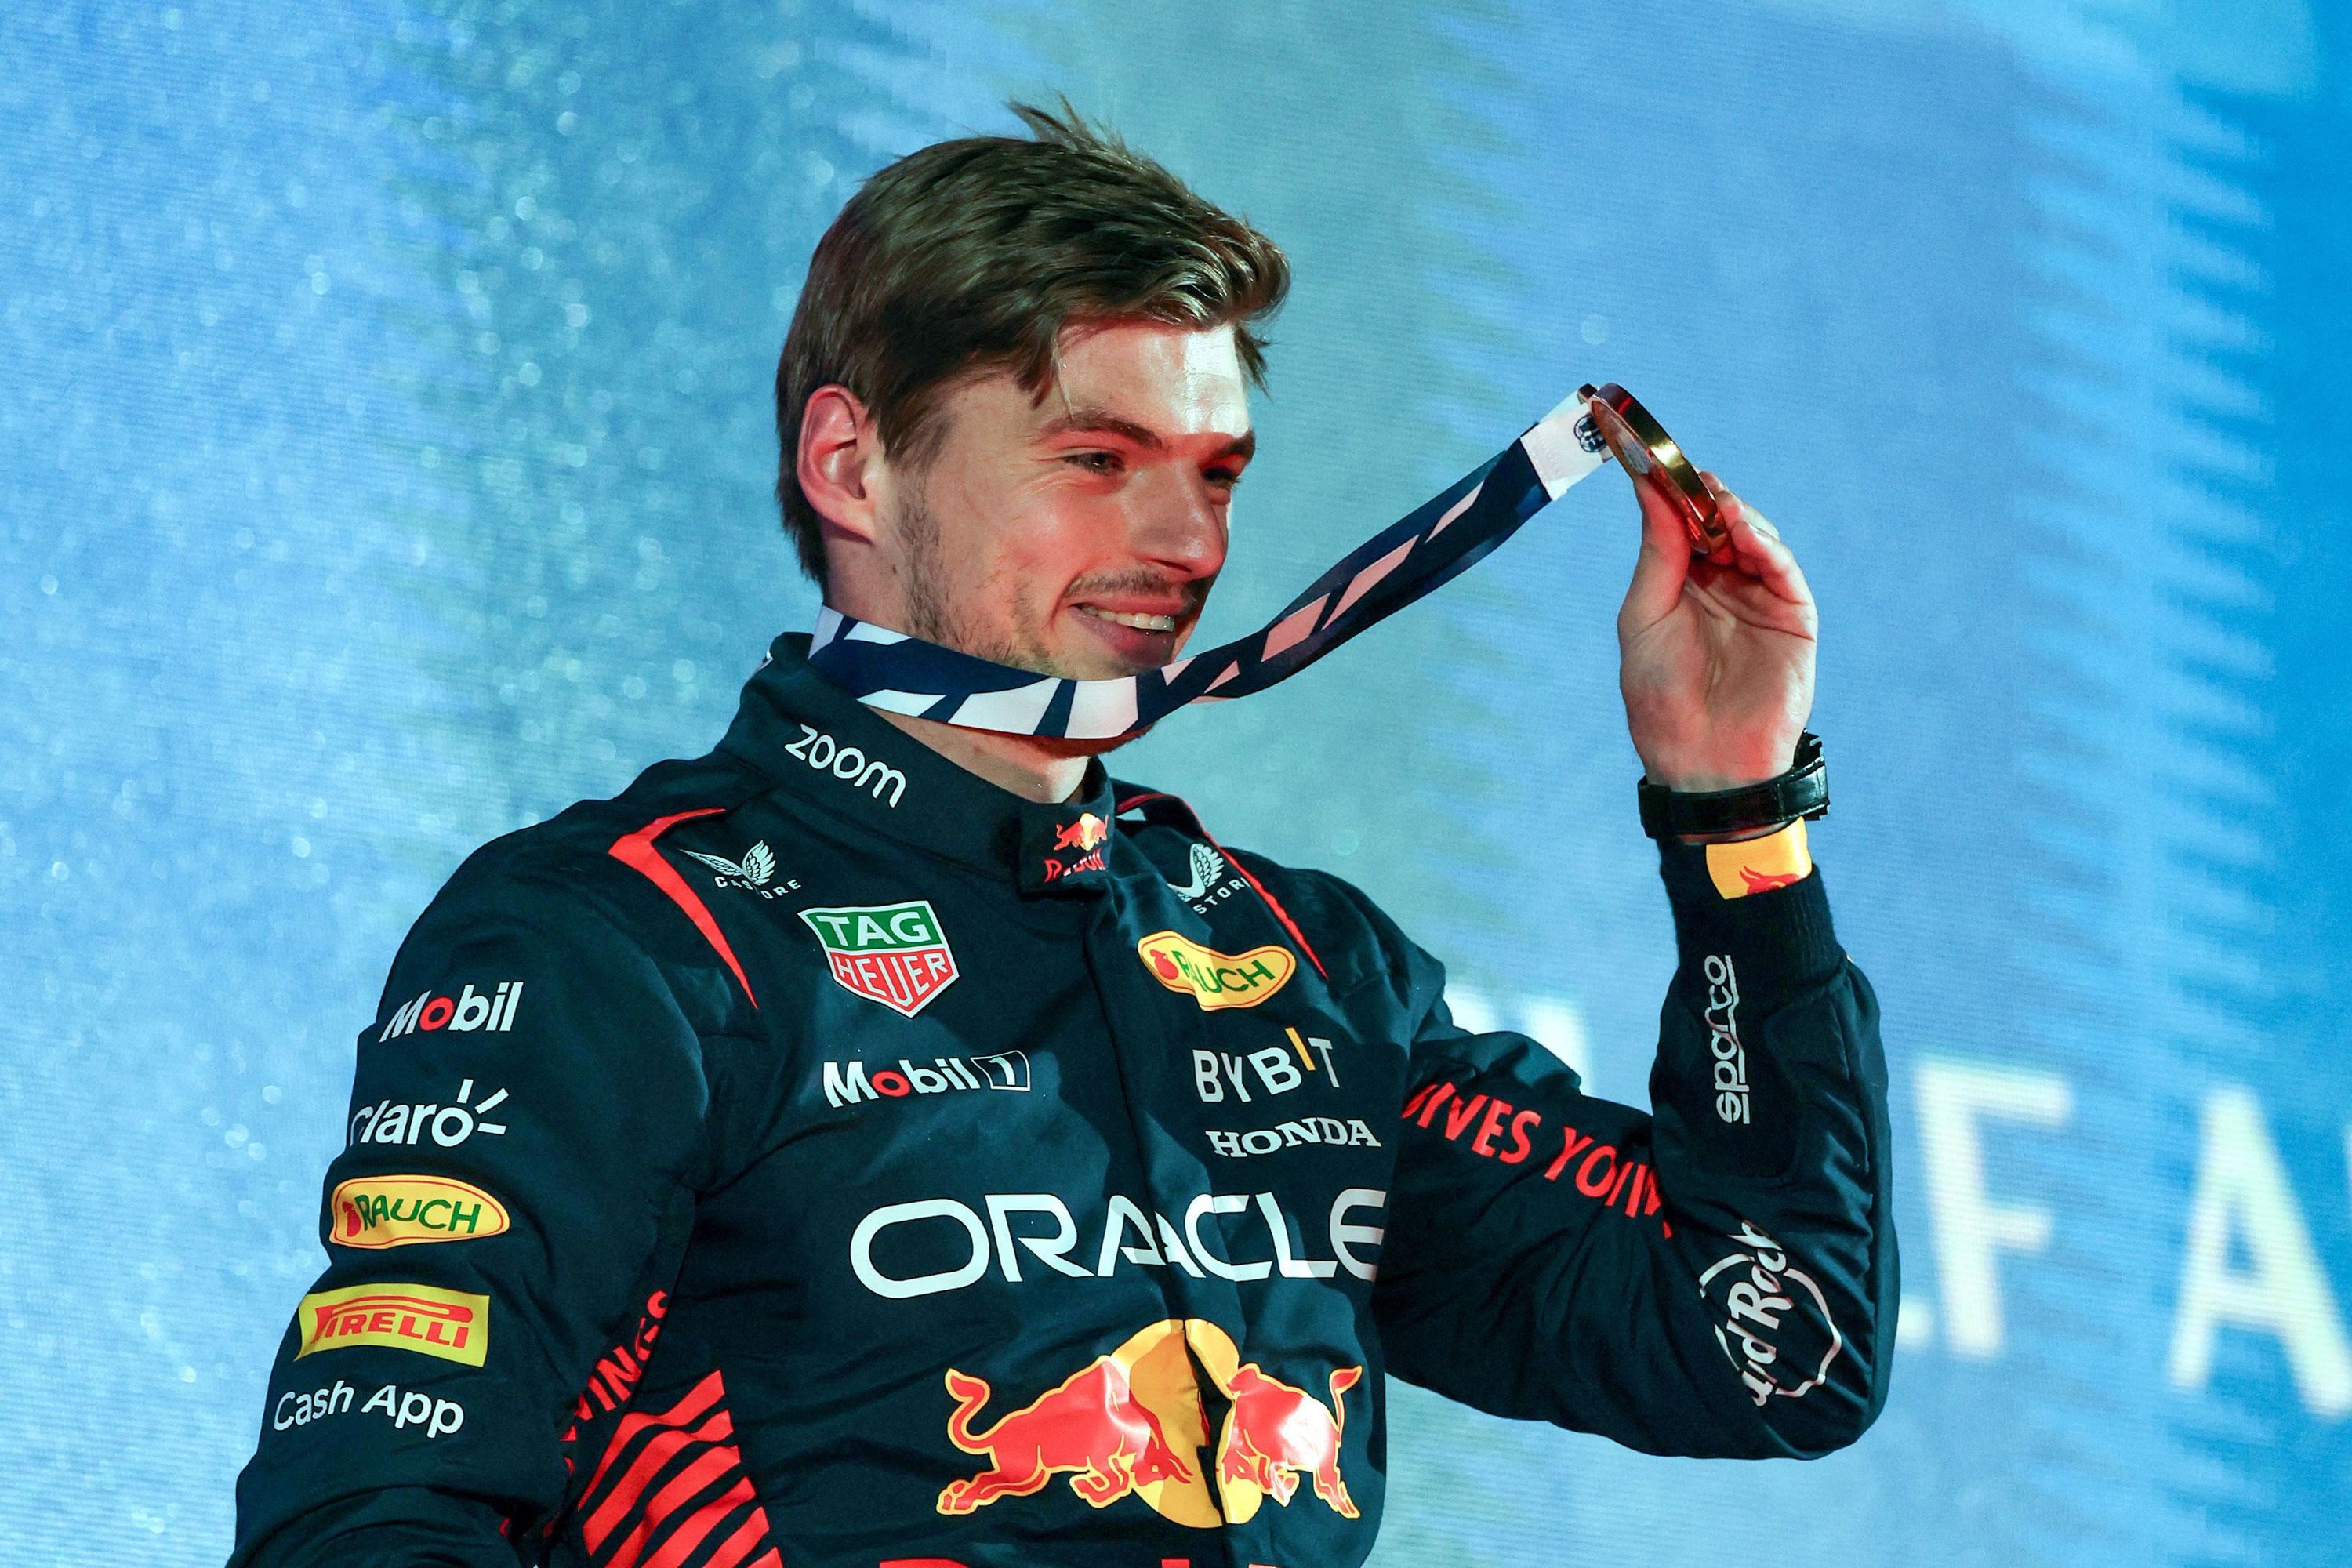 Bahrain Grand Prix: Max Verstappen cruises to victory in season-opening  race | CNN